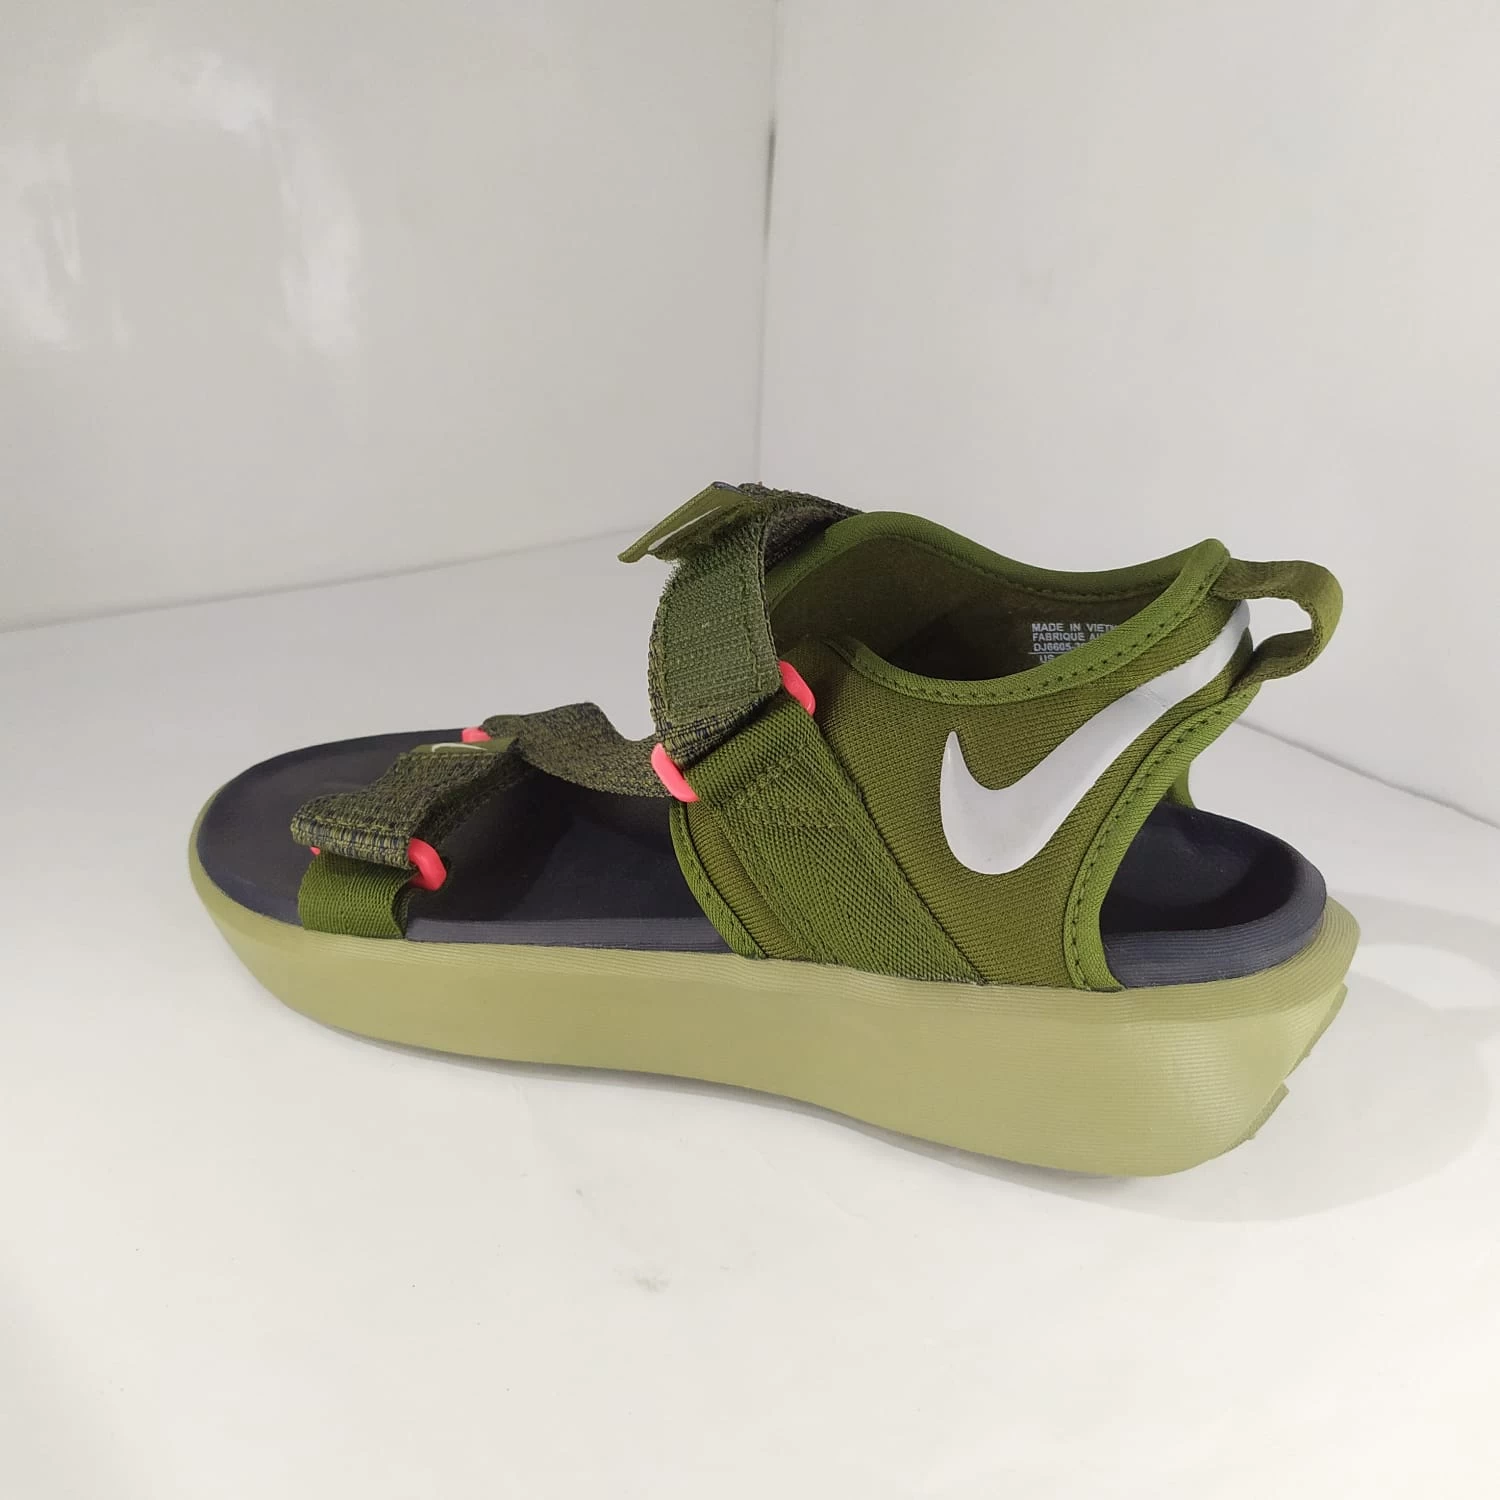 Nike Vista Sandle for Boys | Nike snkrs